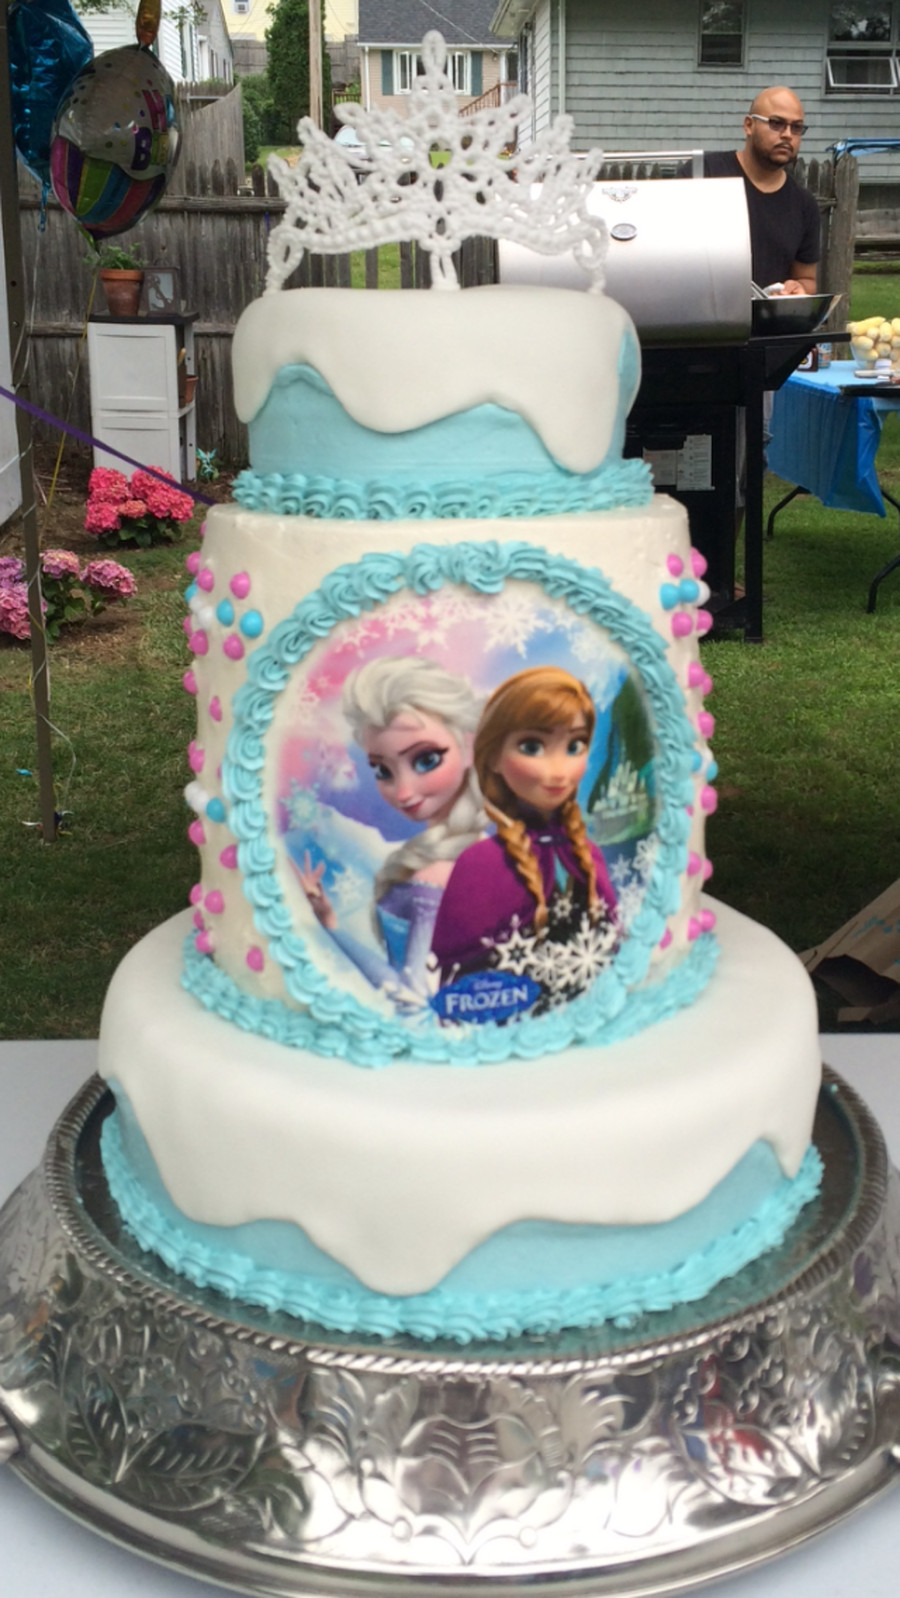 Frozen Themed Birthday Cake
 "frozen" Theme Birthday Cake CakeCentral